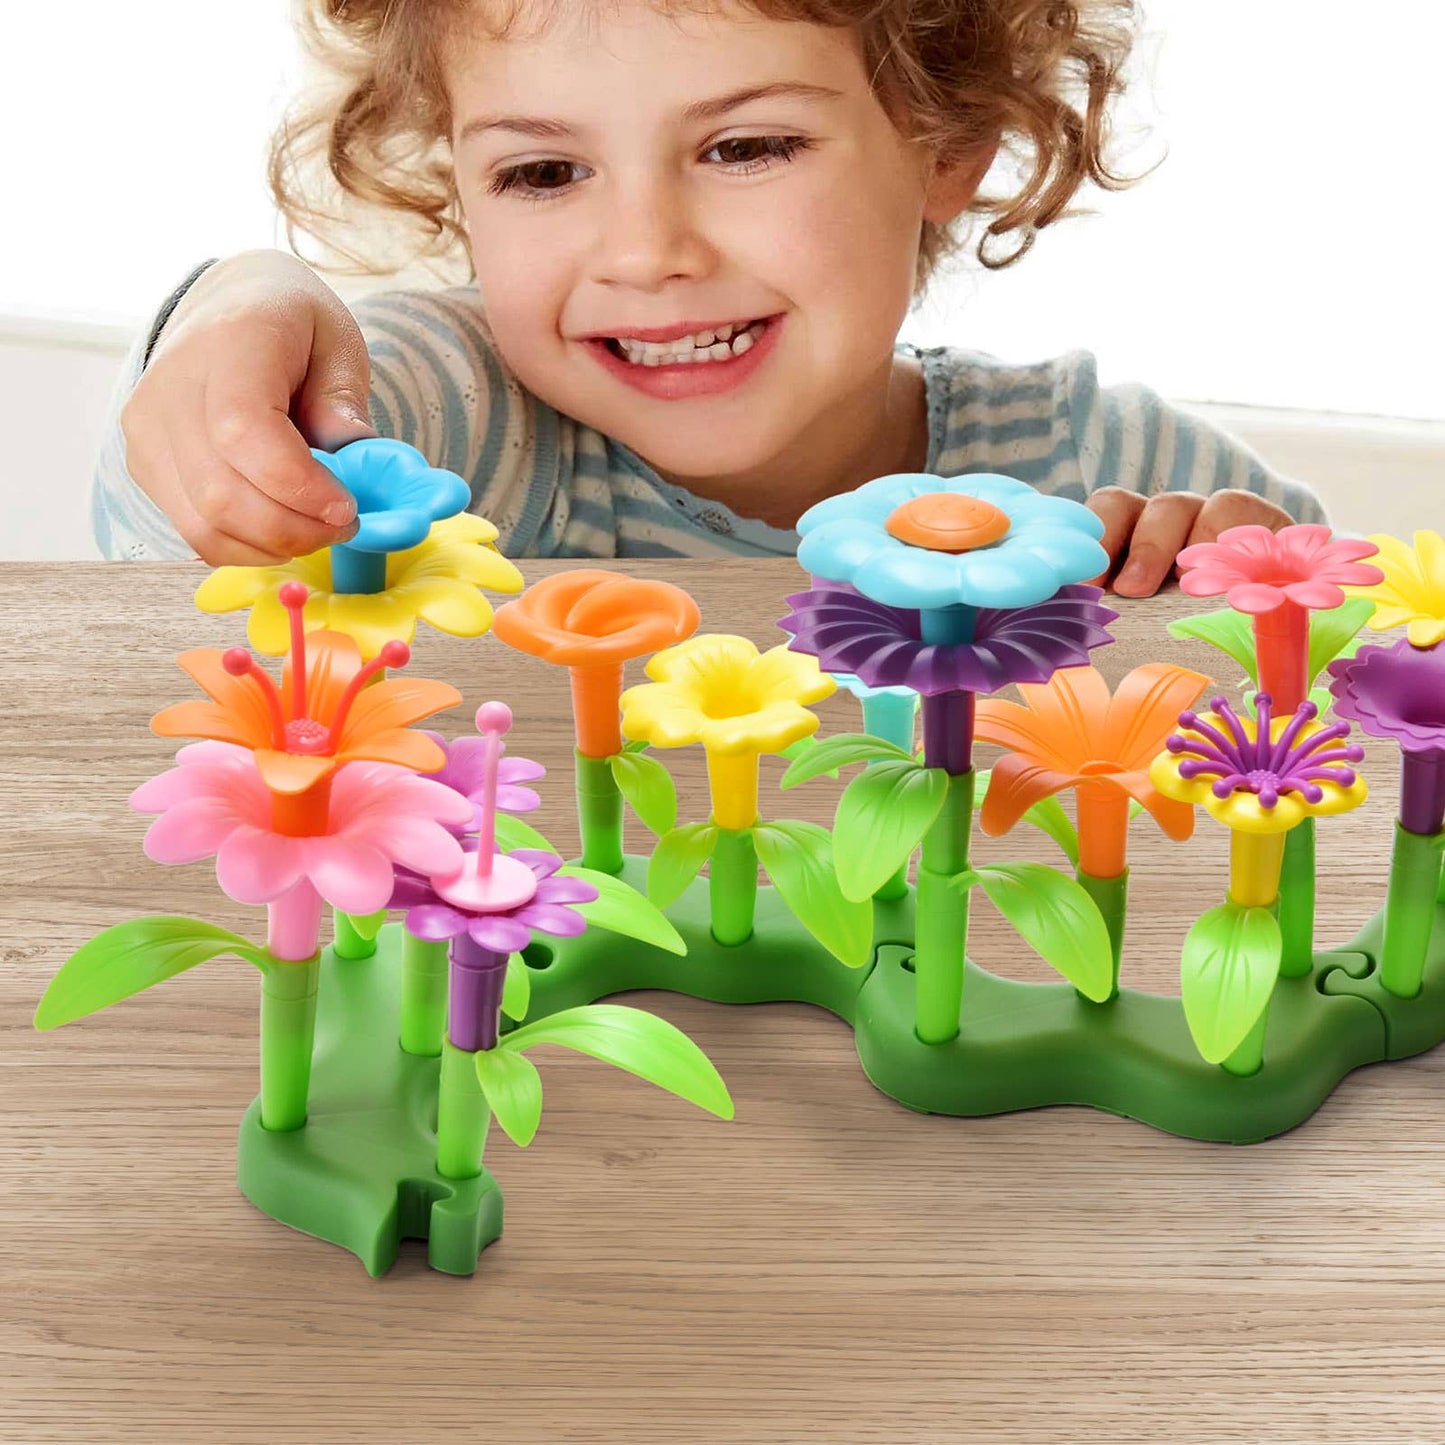 148PCS Garden Building Toys, Pretend Play, Preschool STEM